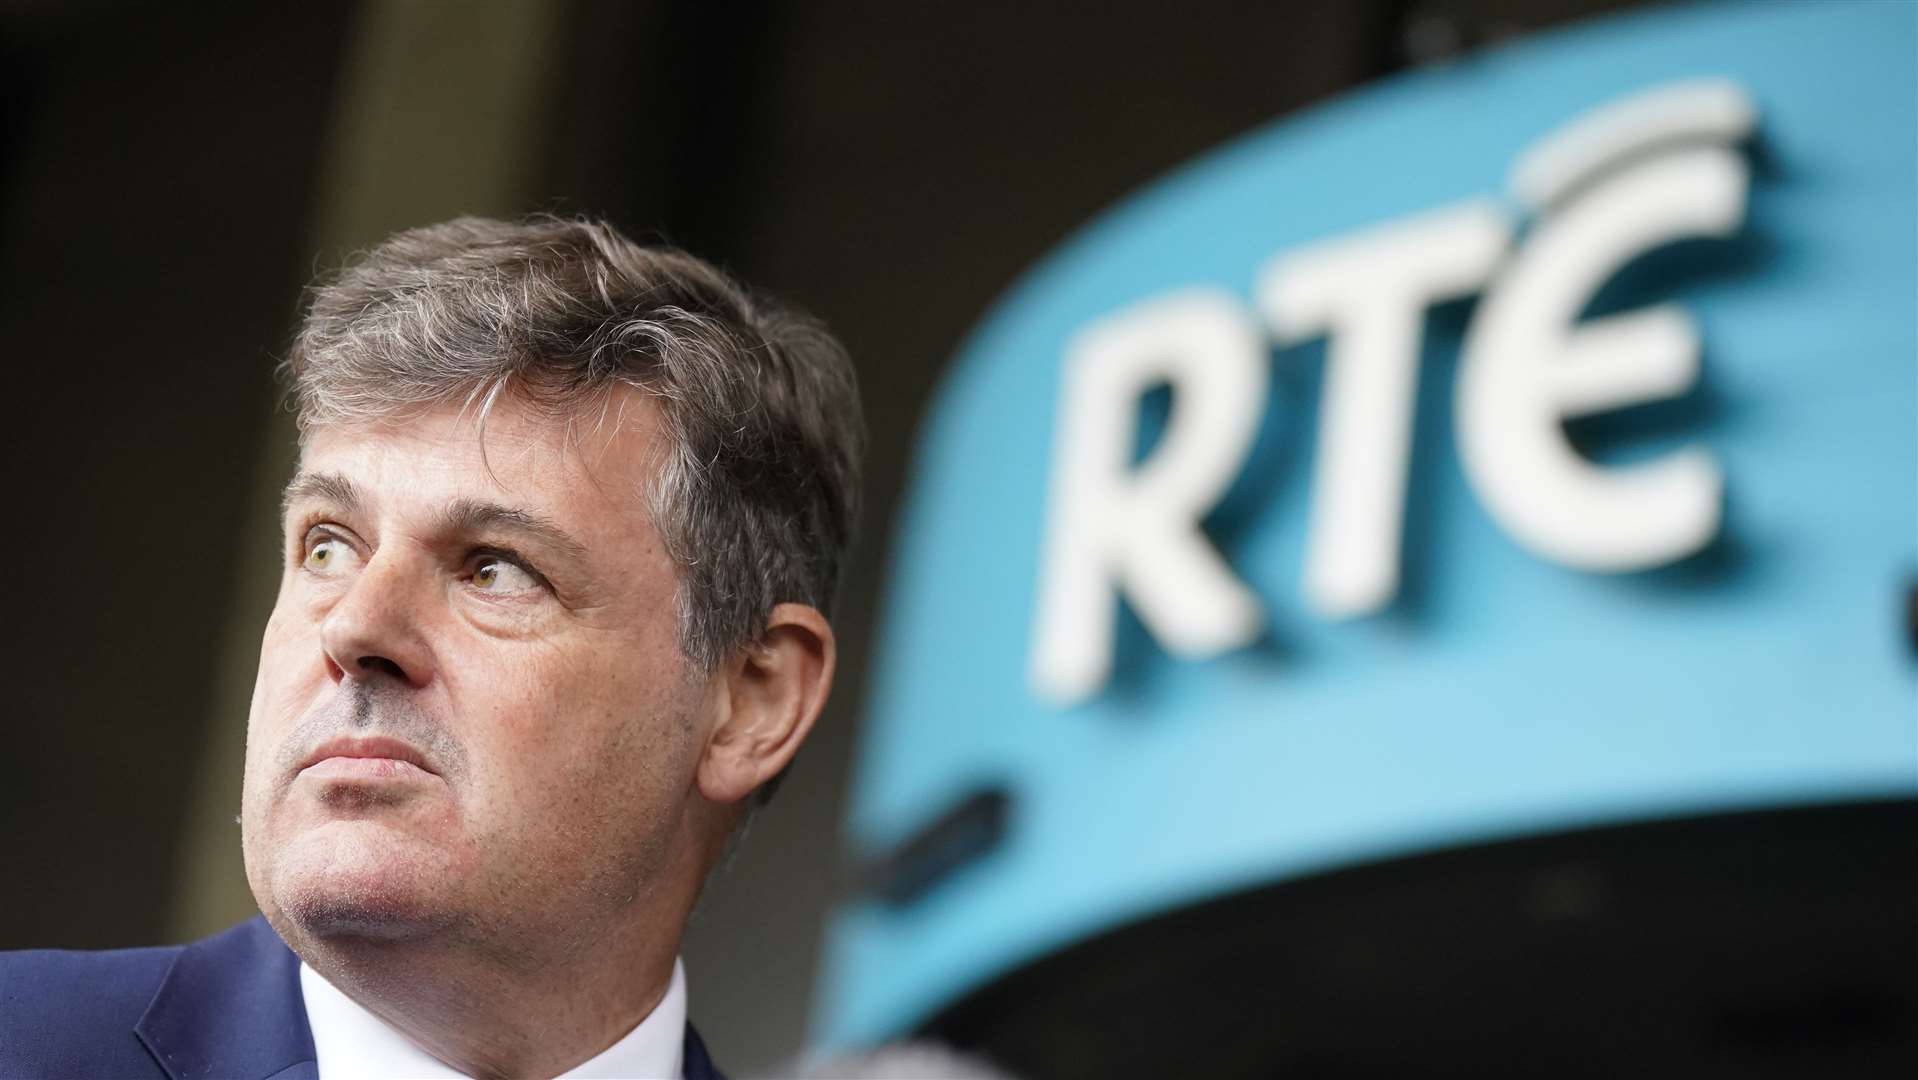 New RTE director general Kevin Bakhurst speaks to the media (Niall Carson/PA)